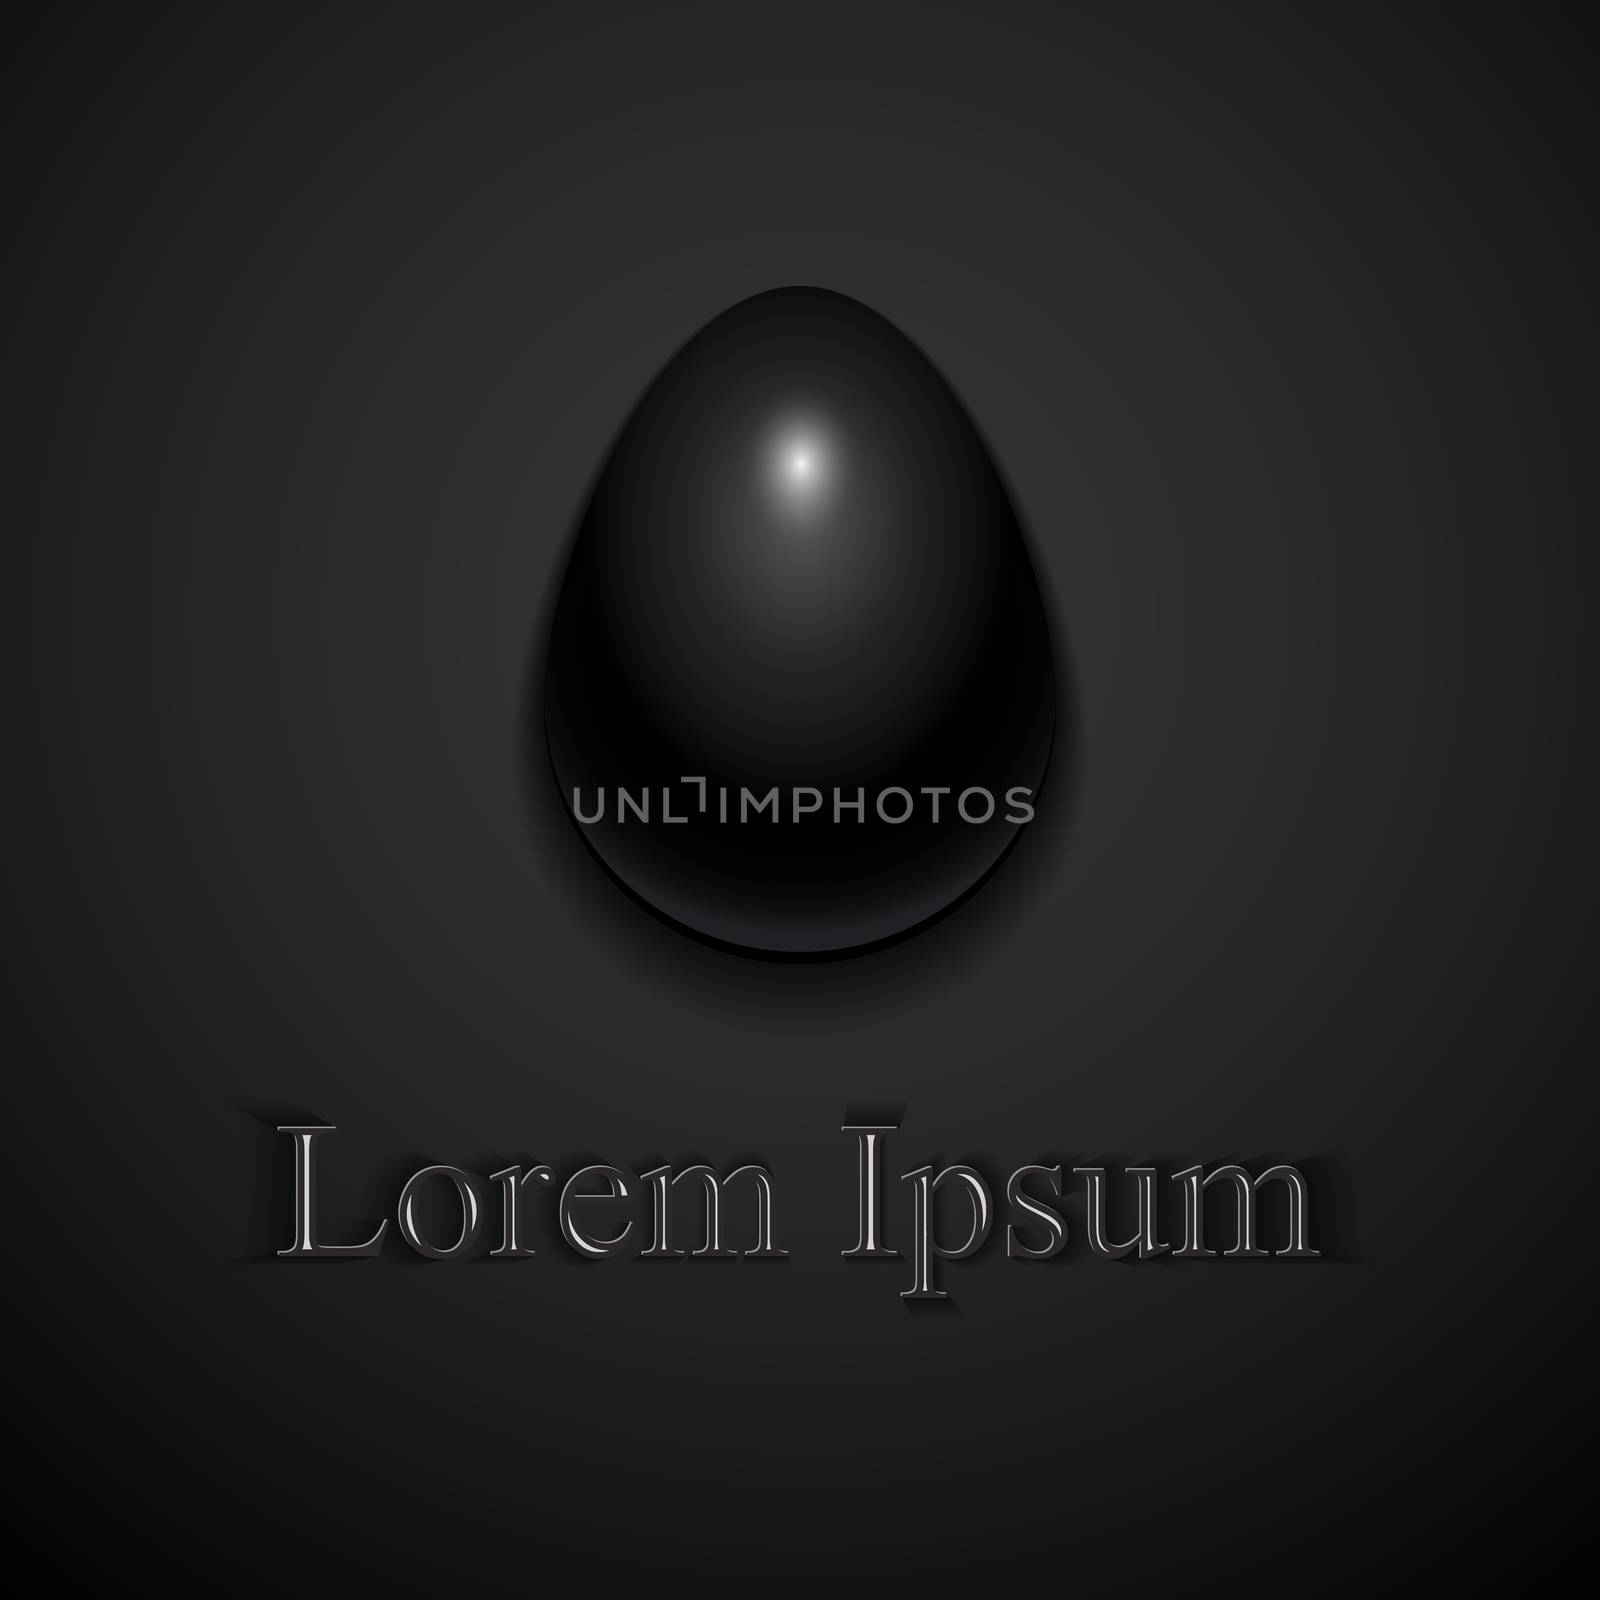 Stylish creative black glossy easter egg logo sample text.